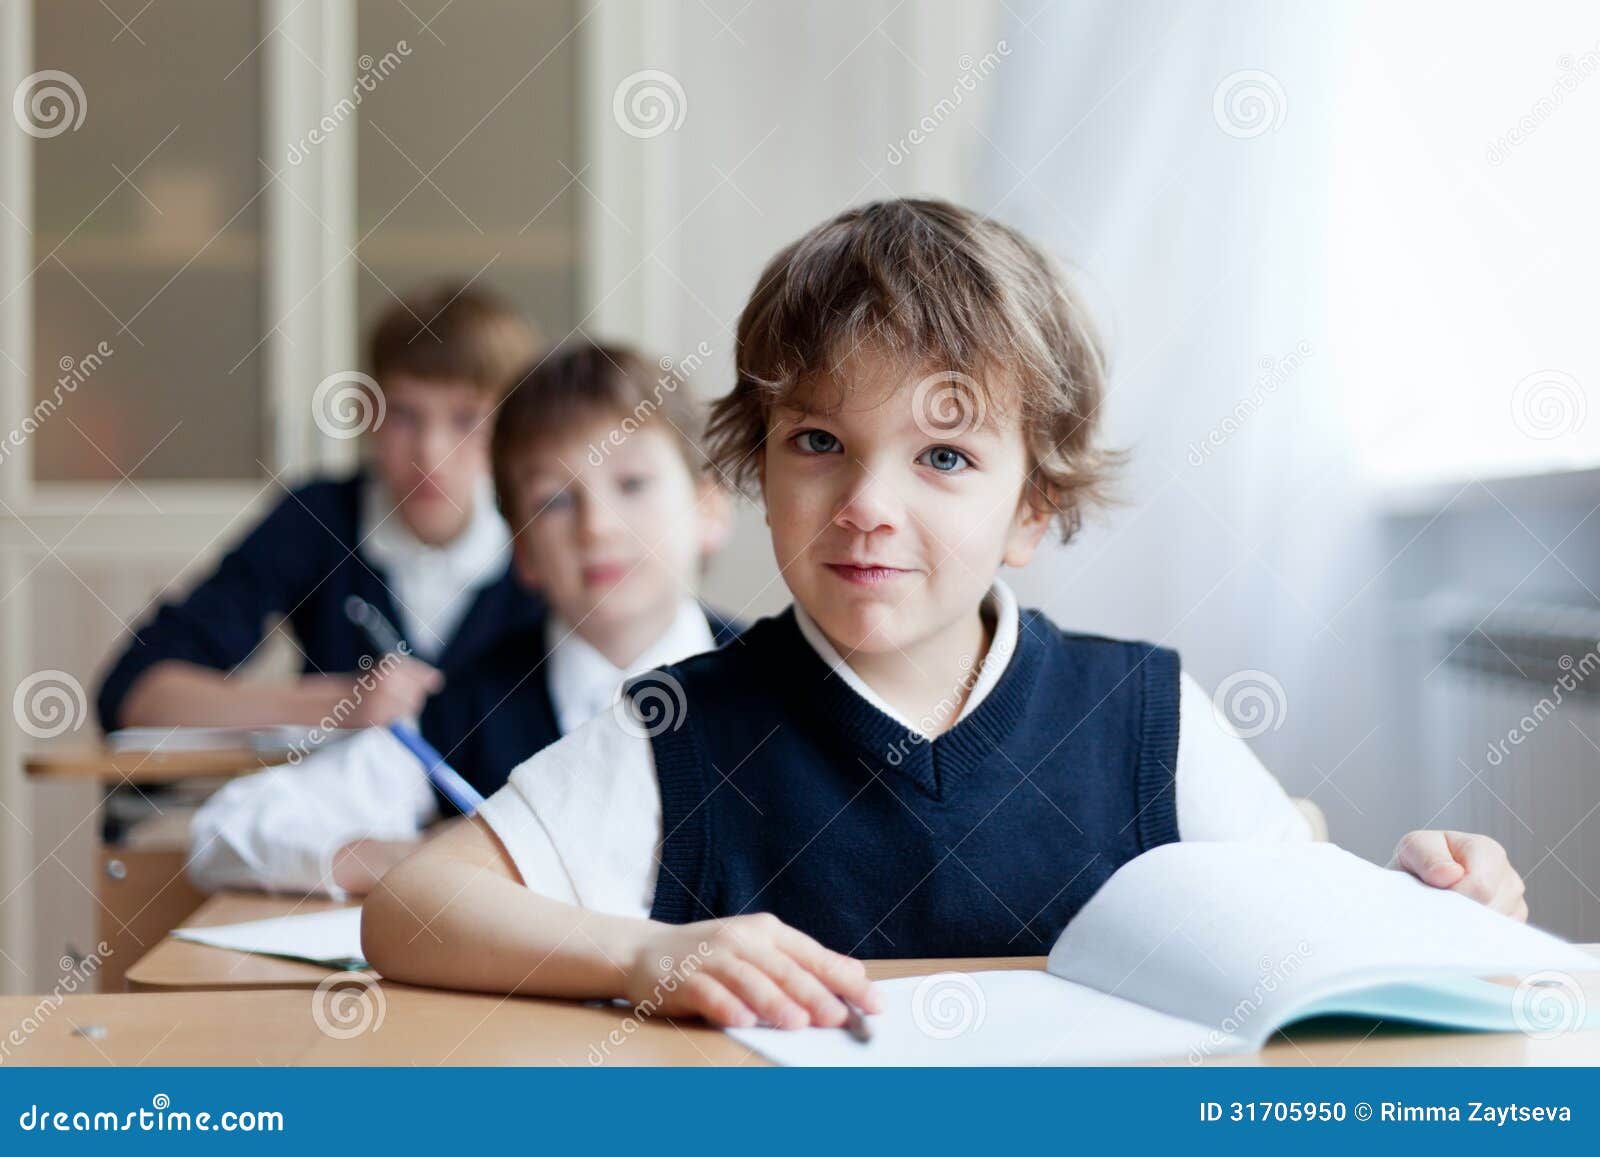 diligent student sitting at desk, classroom